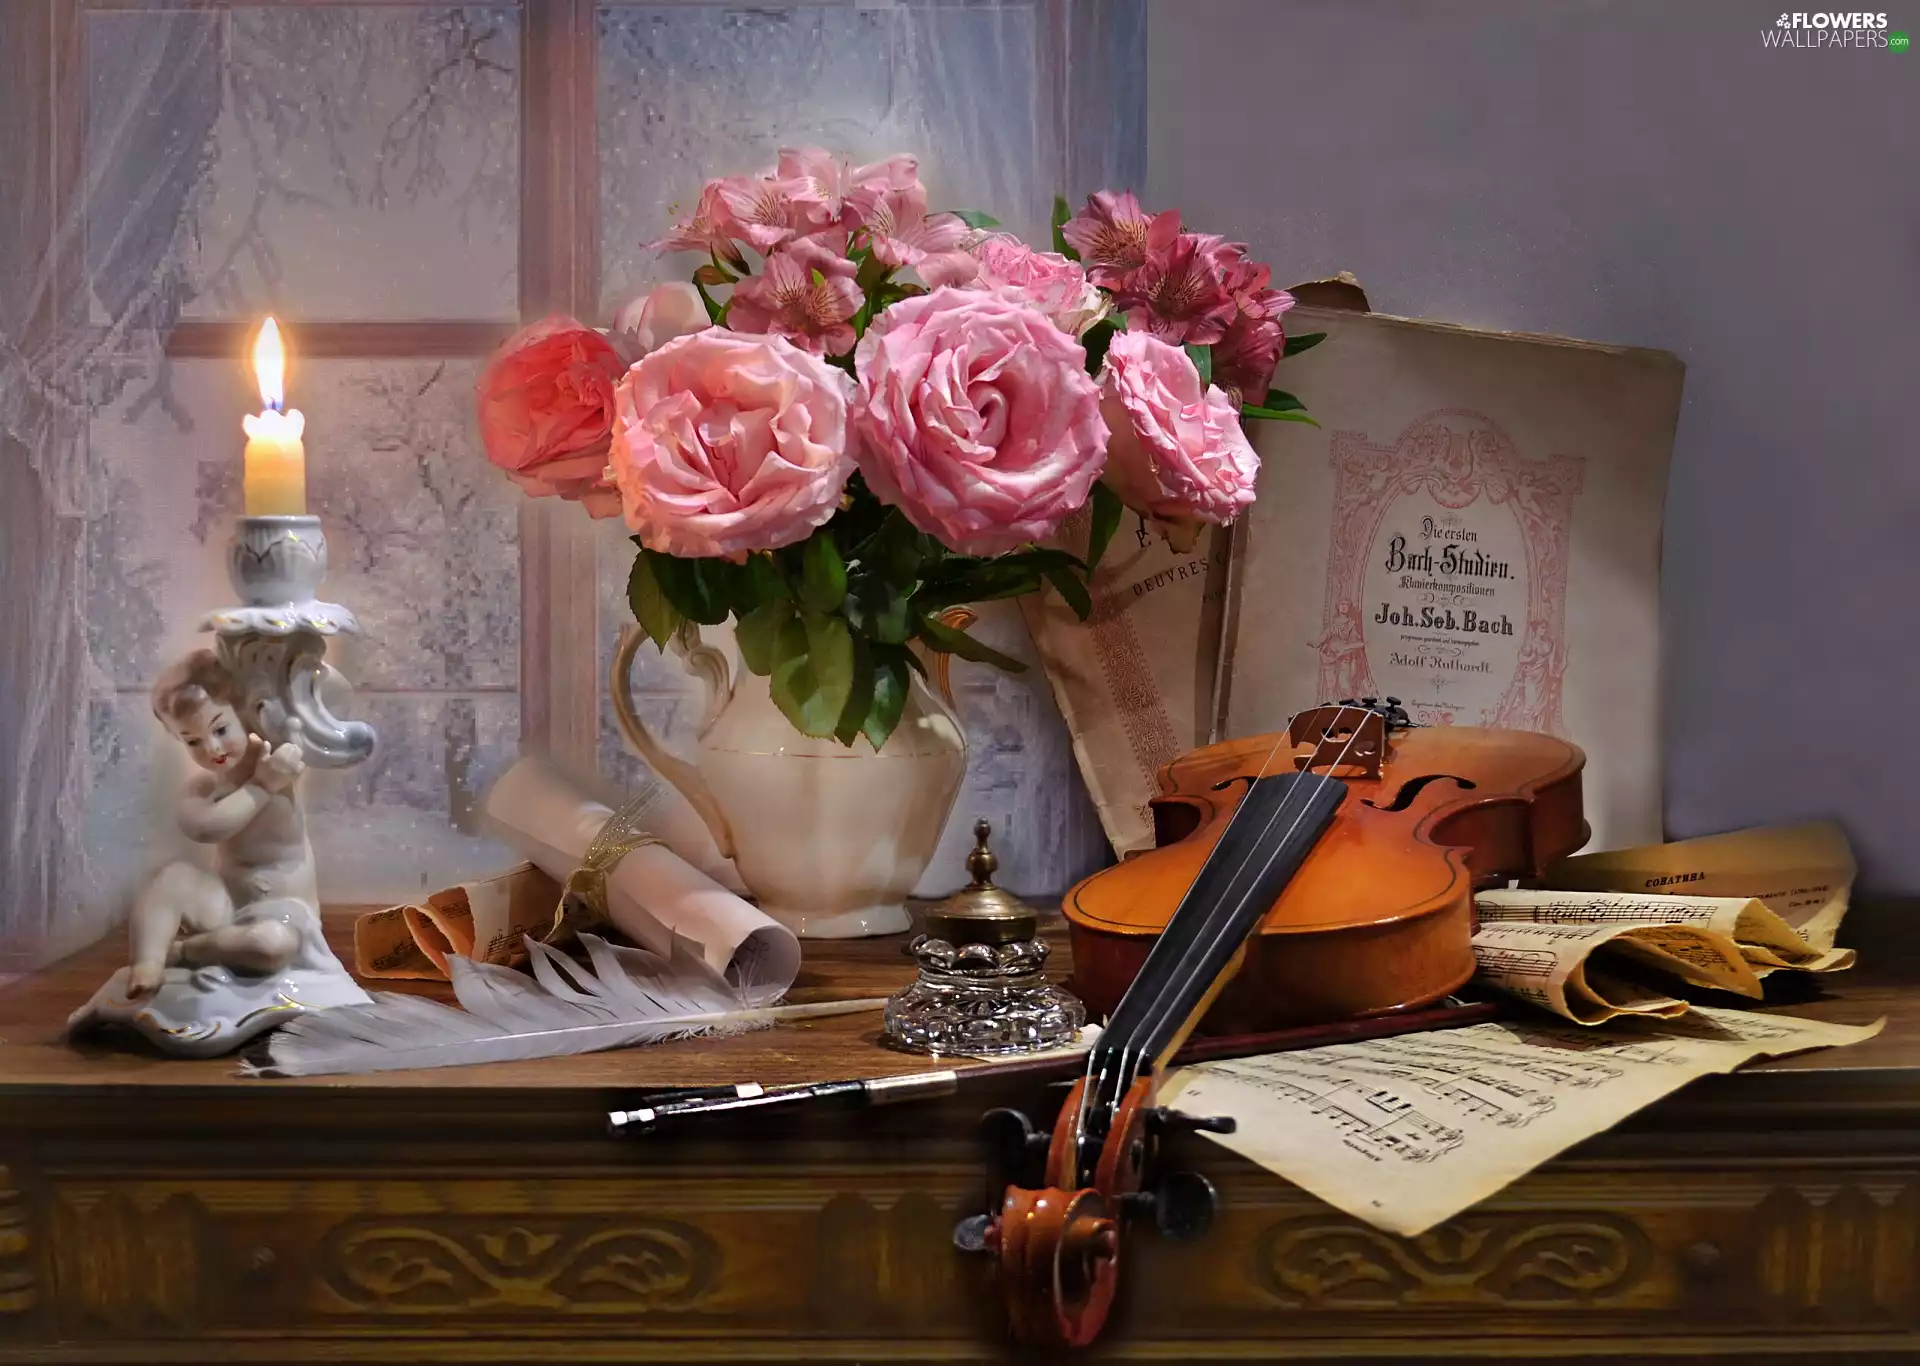 violin, composition, Tunes, jug, candlestick, Window, roses, Candle, Alstroemeria